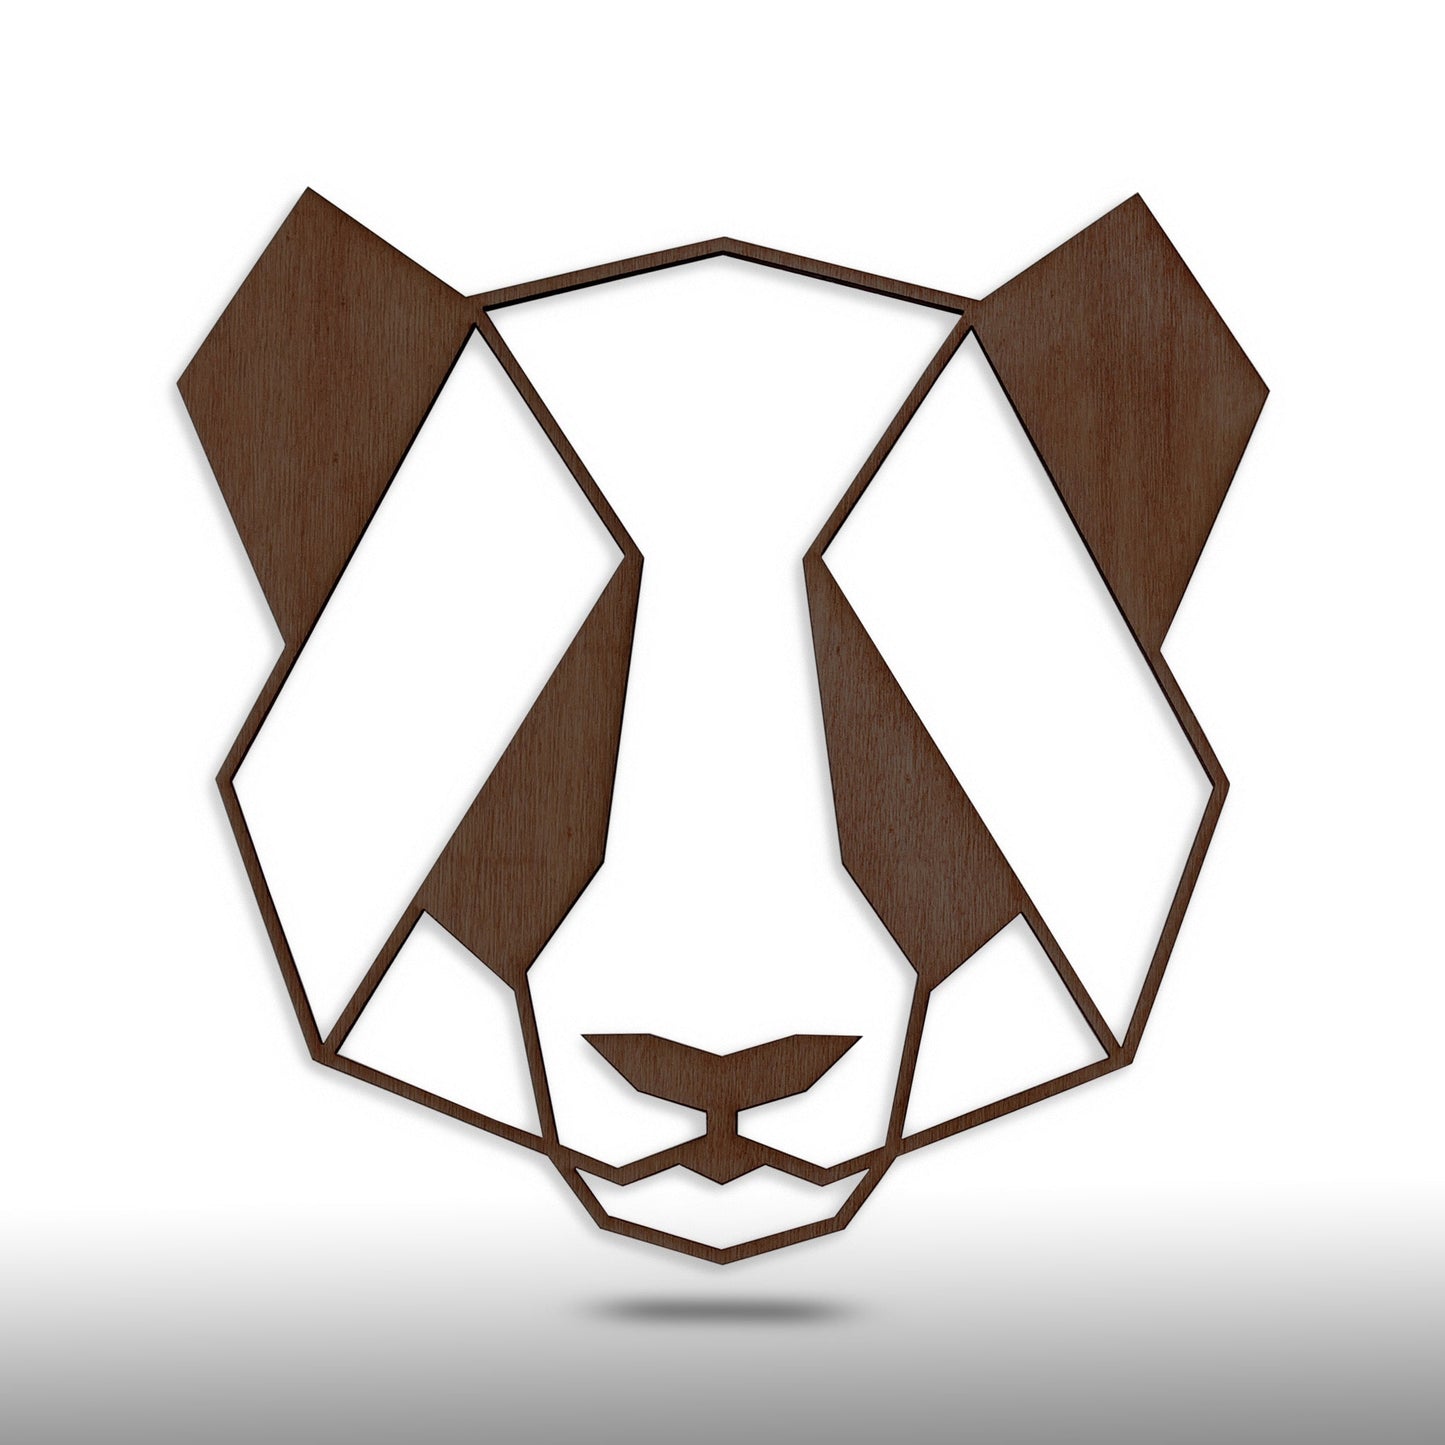 Wandbild Holz "Panda" - Nanino Design Onlineshop -